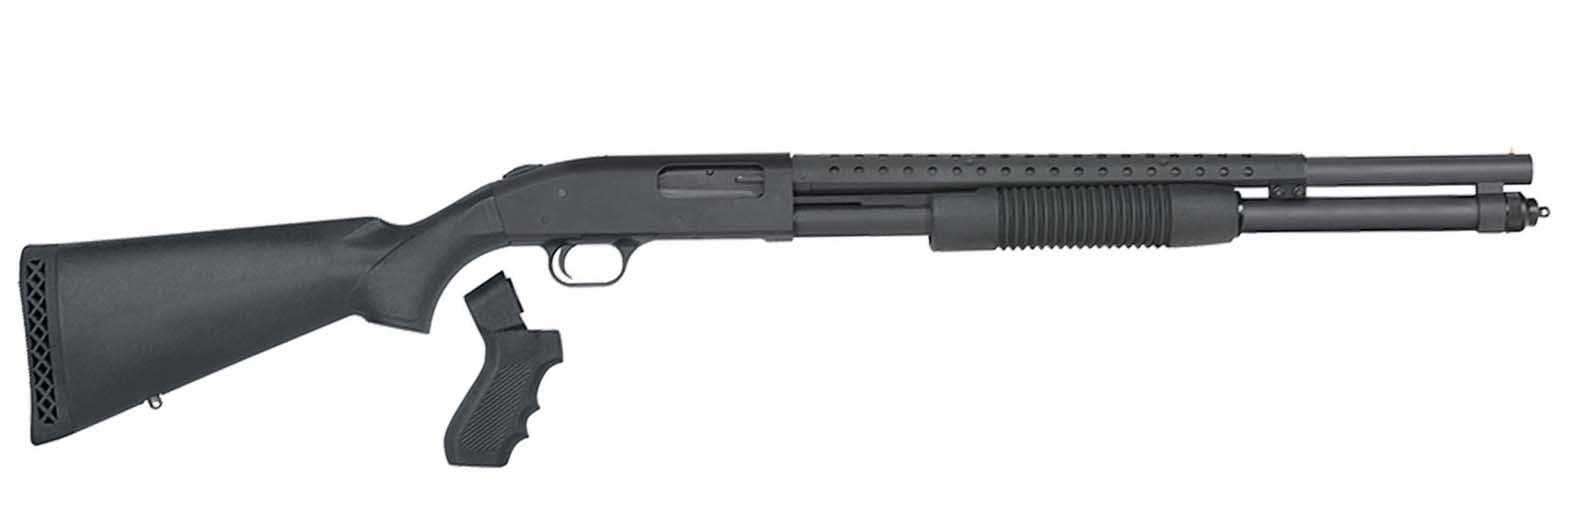 Mossberg 590 Tactical Pump-action Shotgun